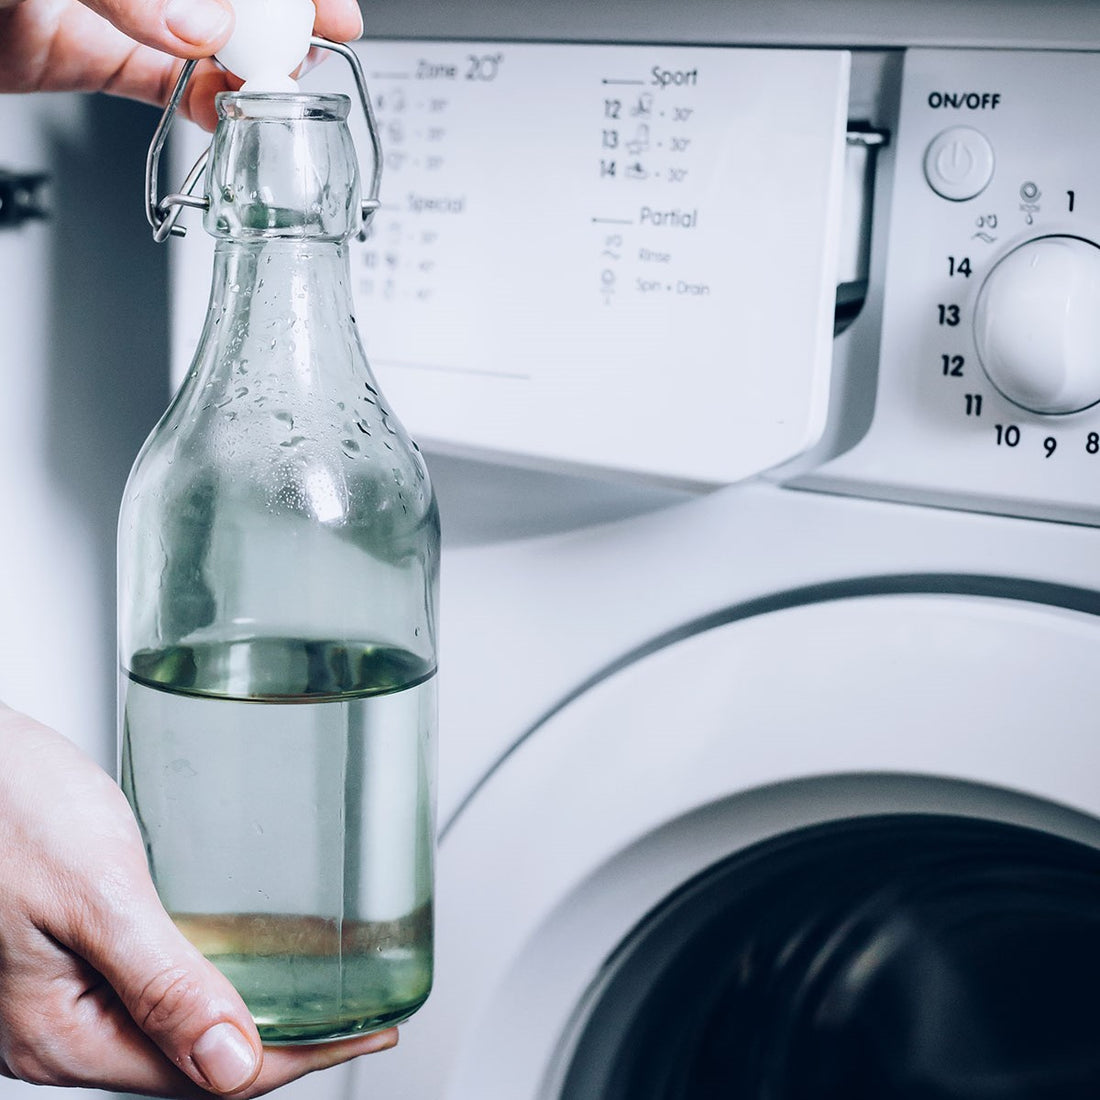 How to Clean Washing Machine